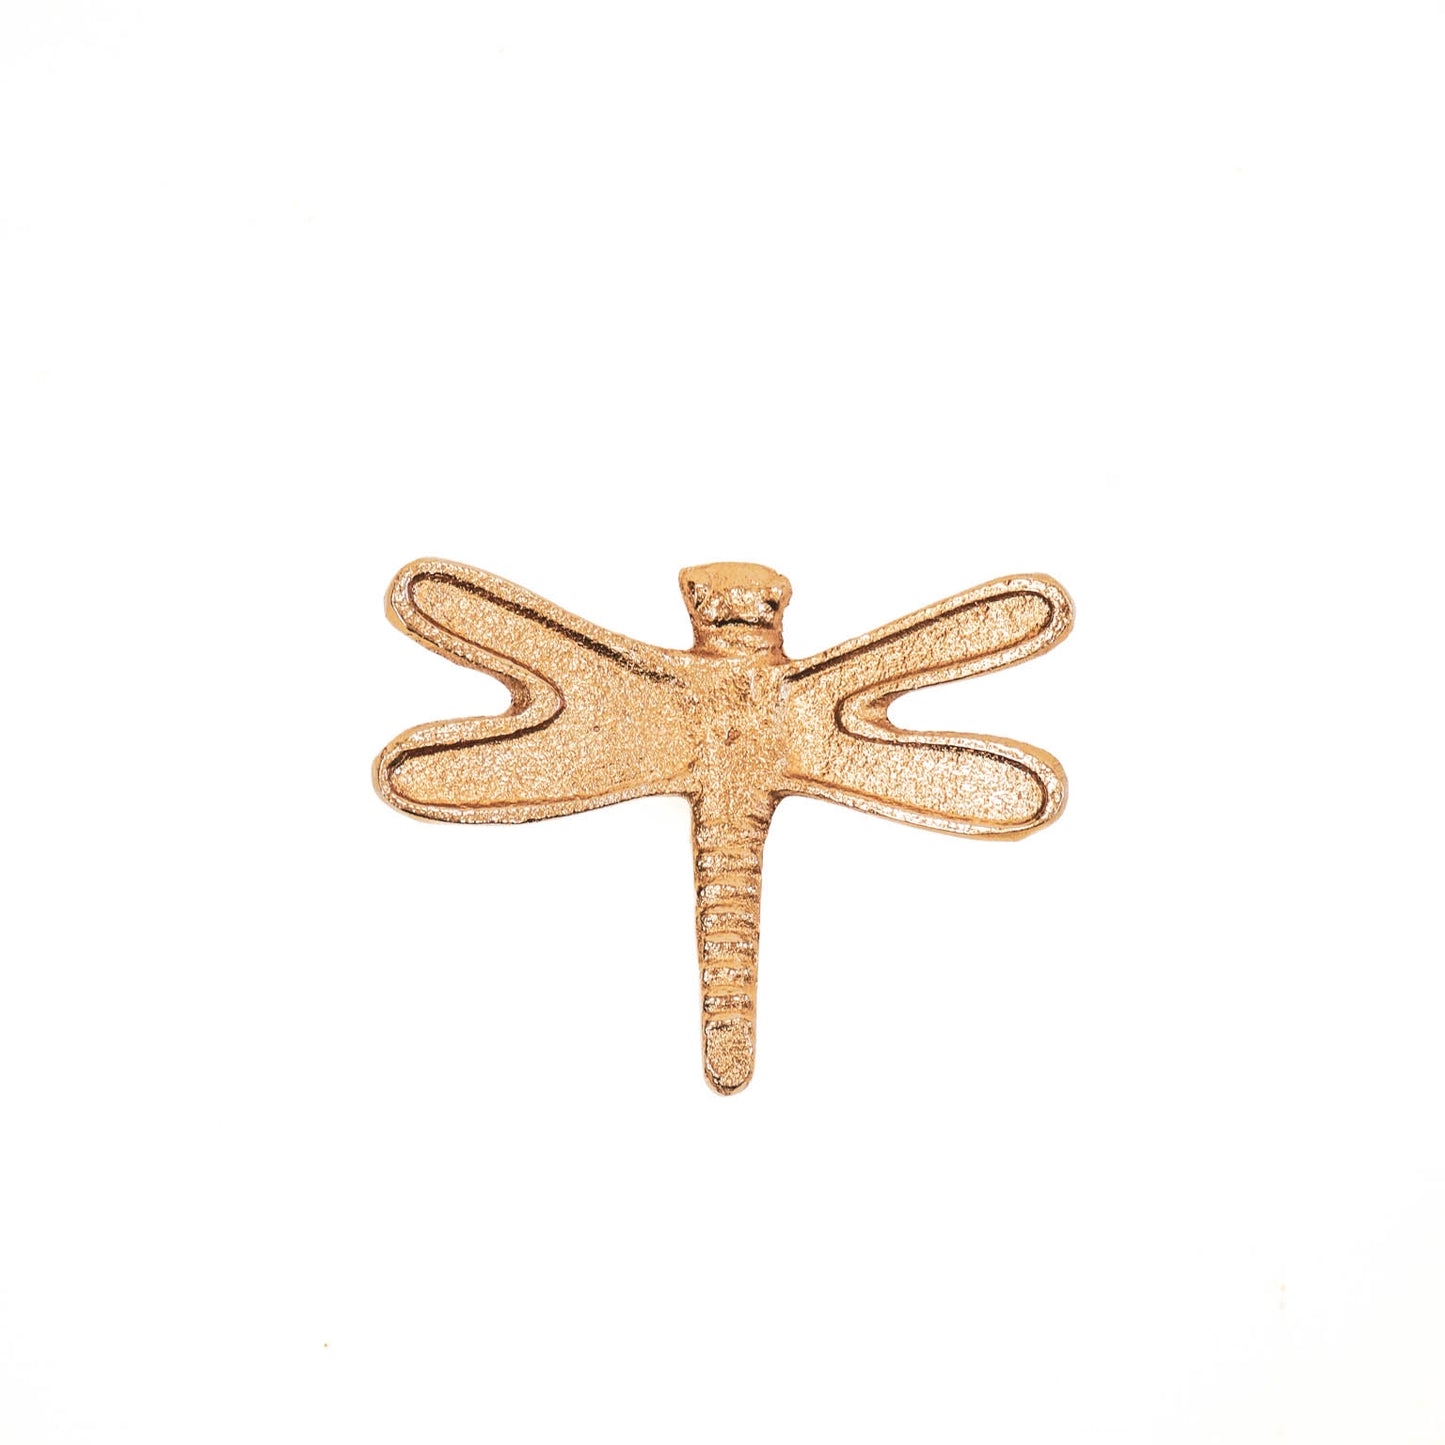 Housevitamin Doorknobs Dragonfly- Gold - Set of 2 - 13x6x9cm